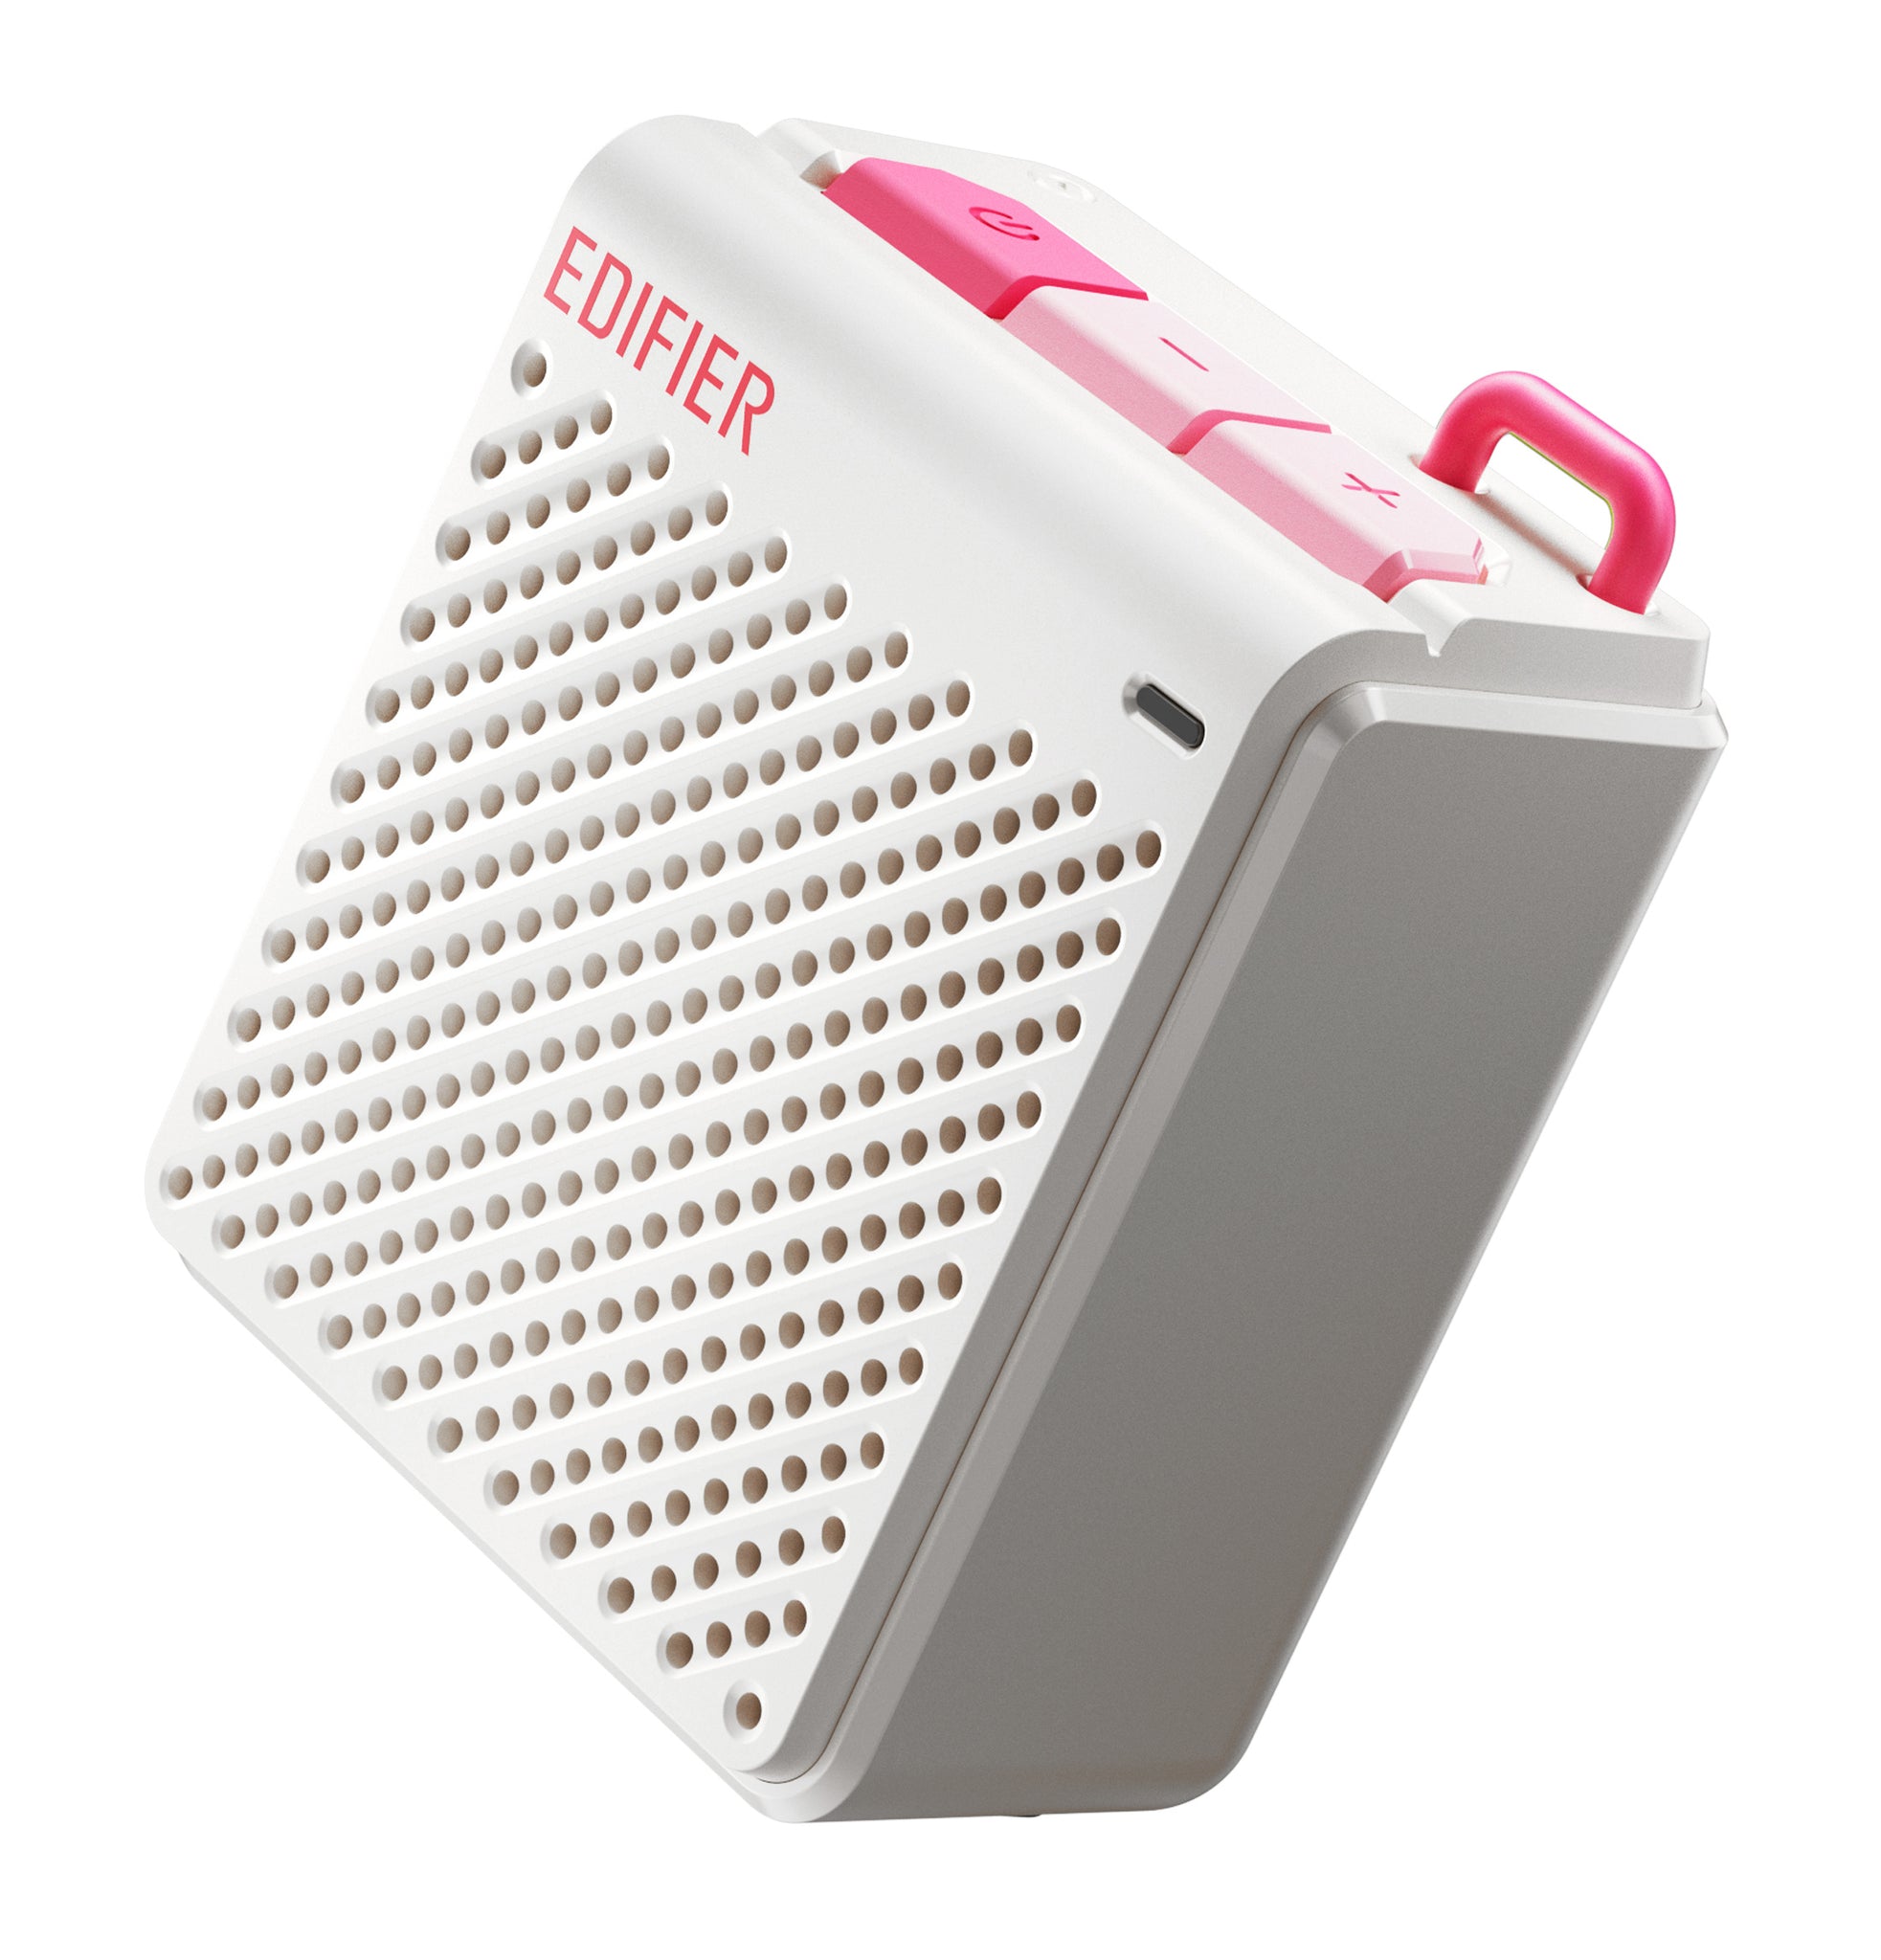 Edifier MP85 Portable Bluetooth Speaker - White